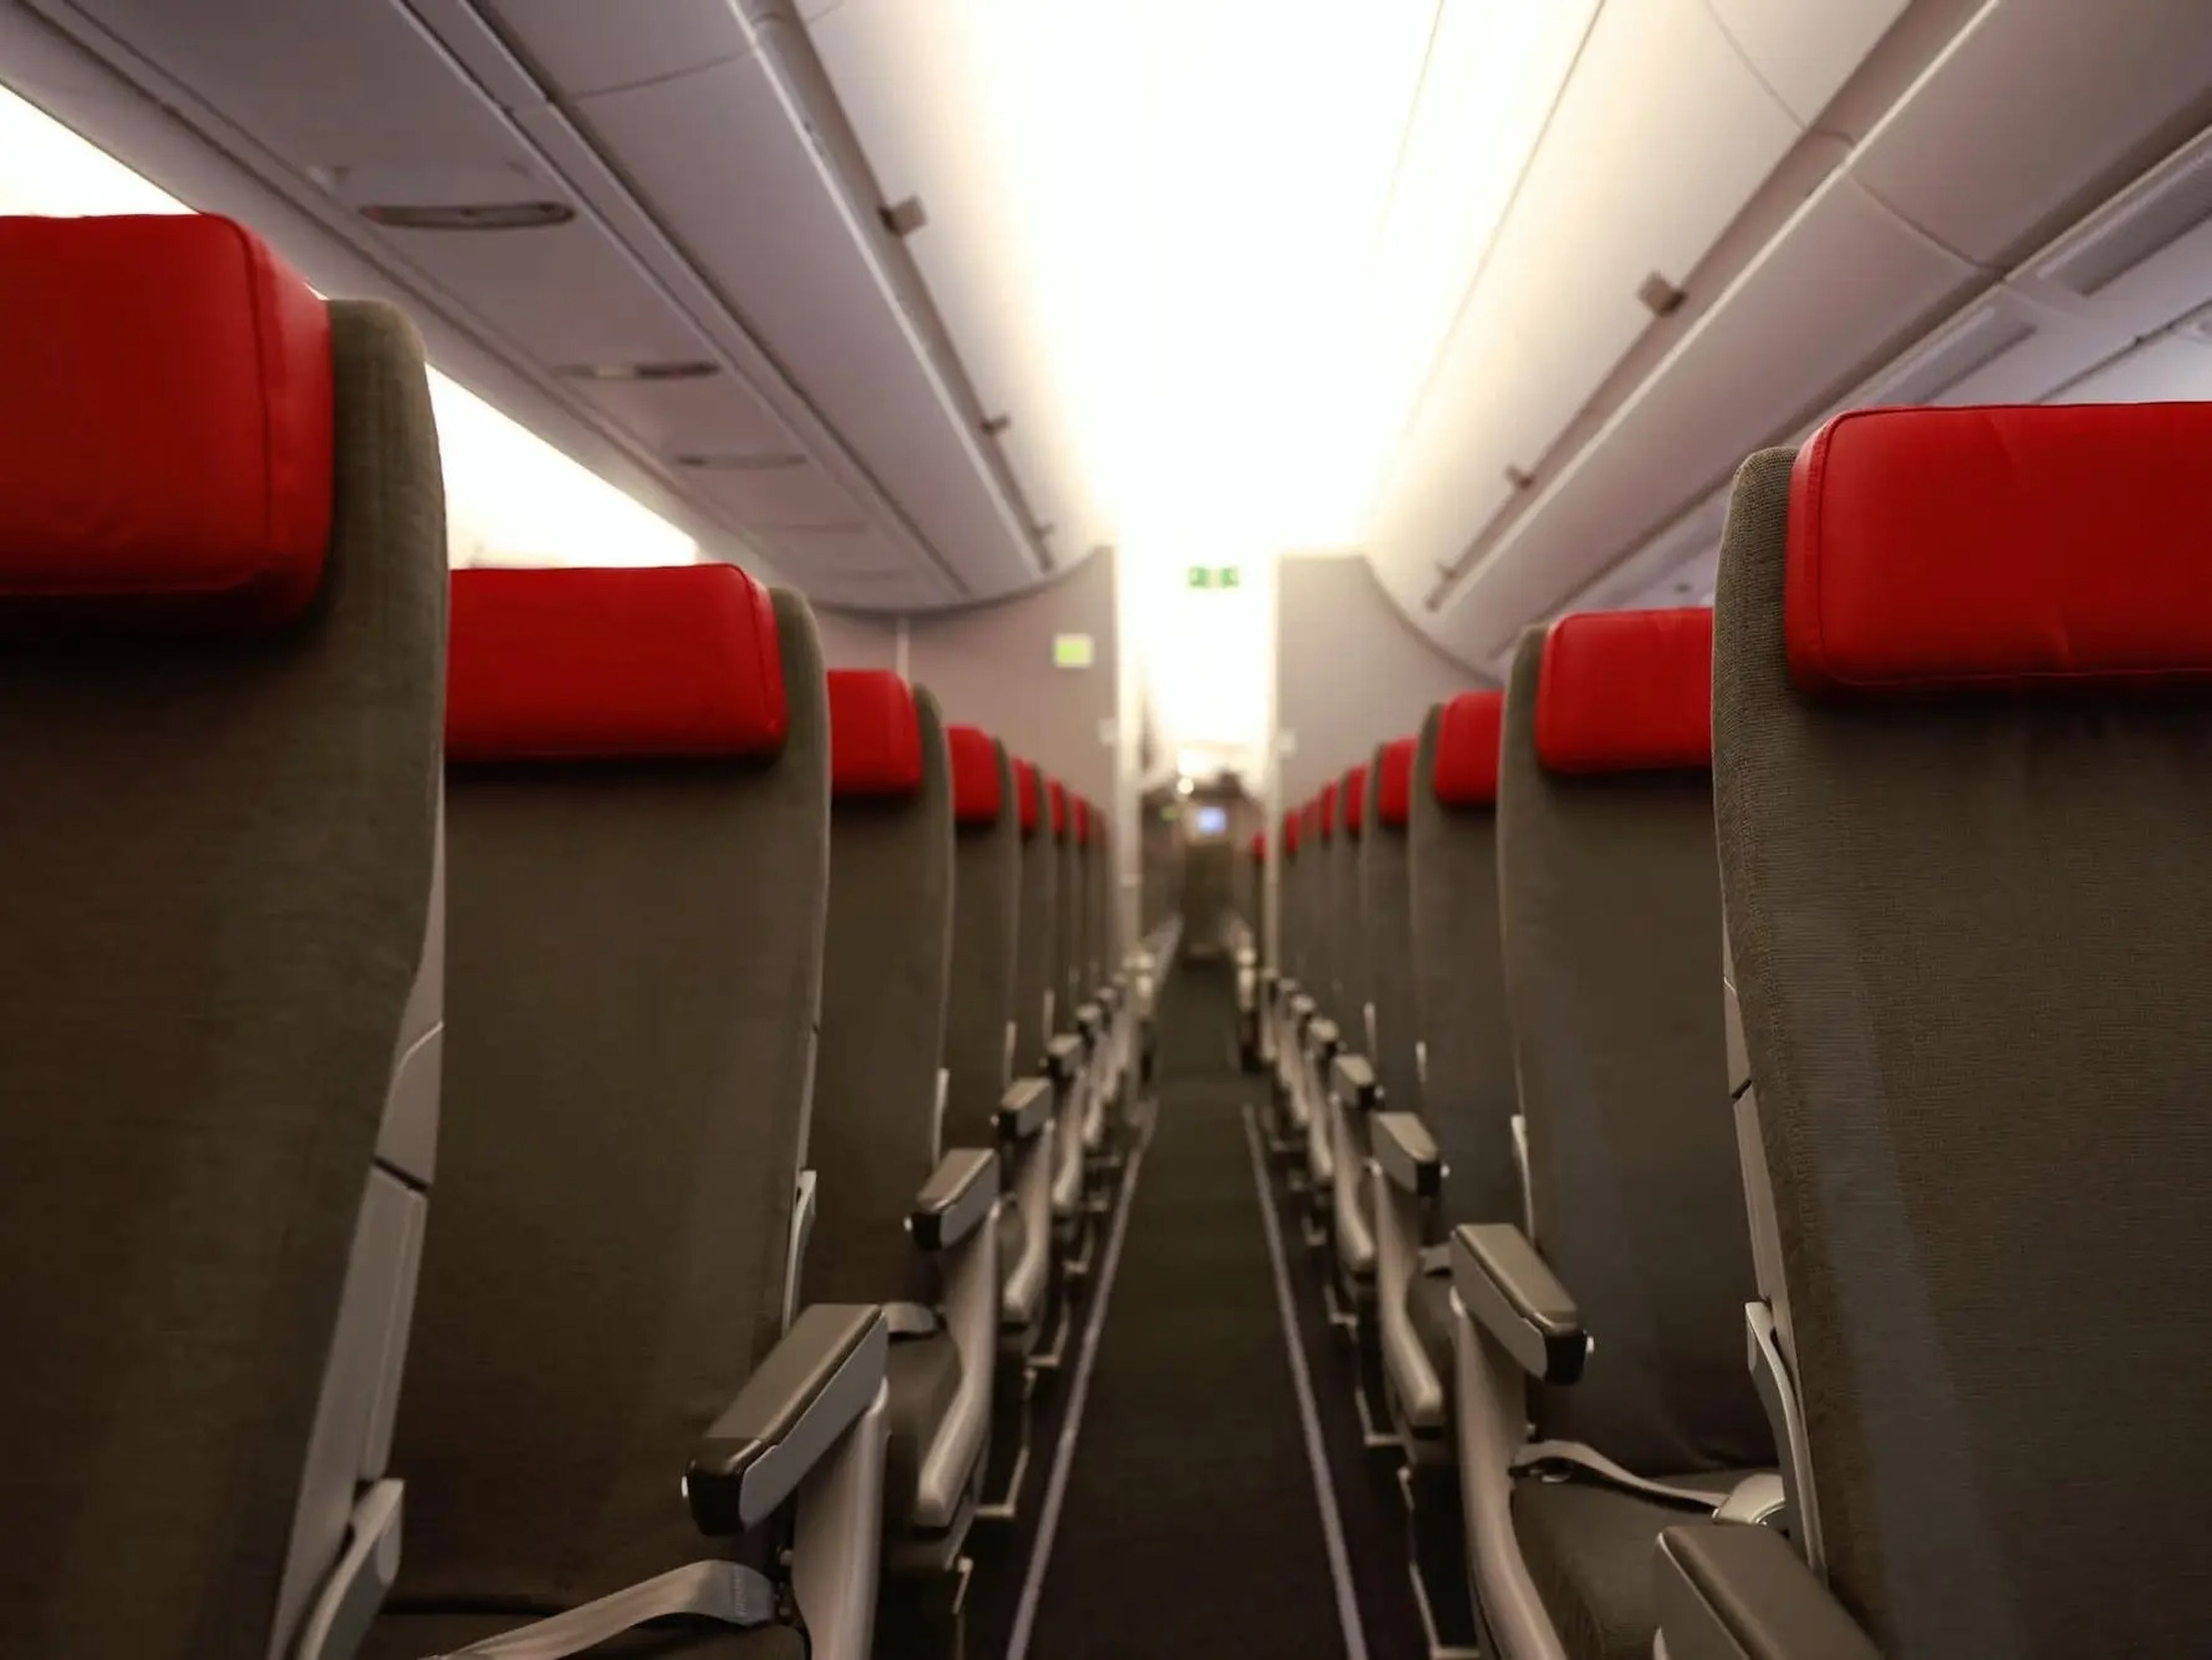 Inside Iberia's new A350-900 cabin.